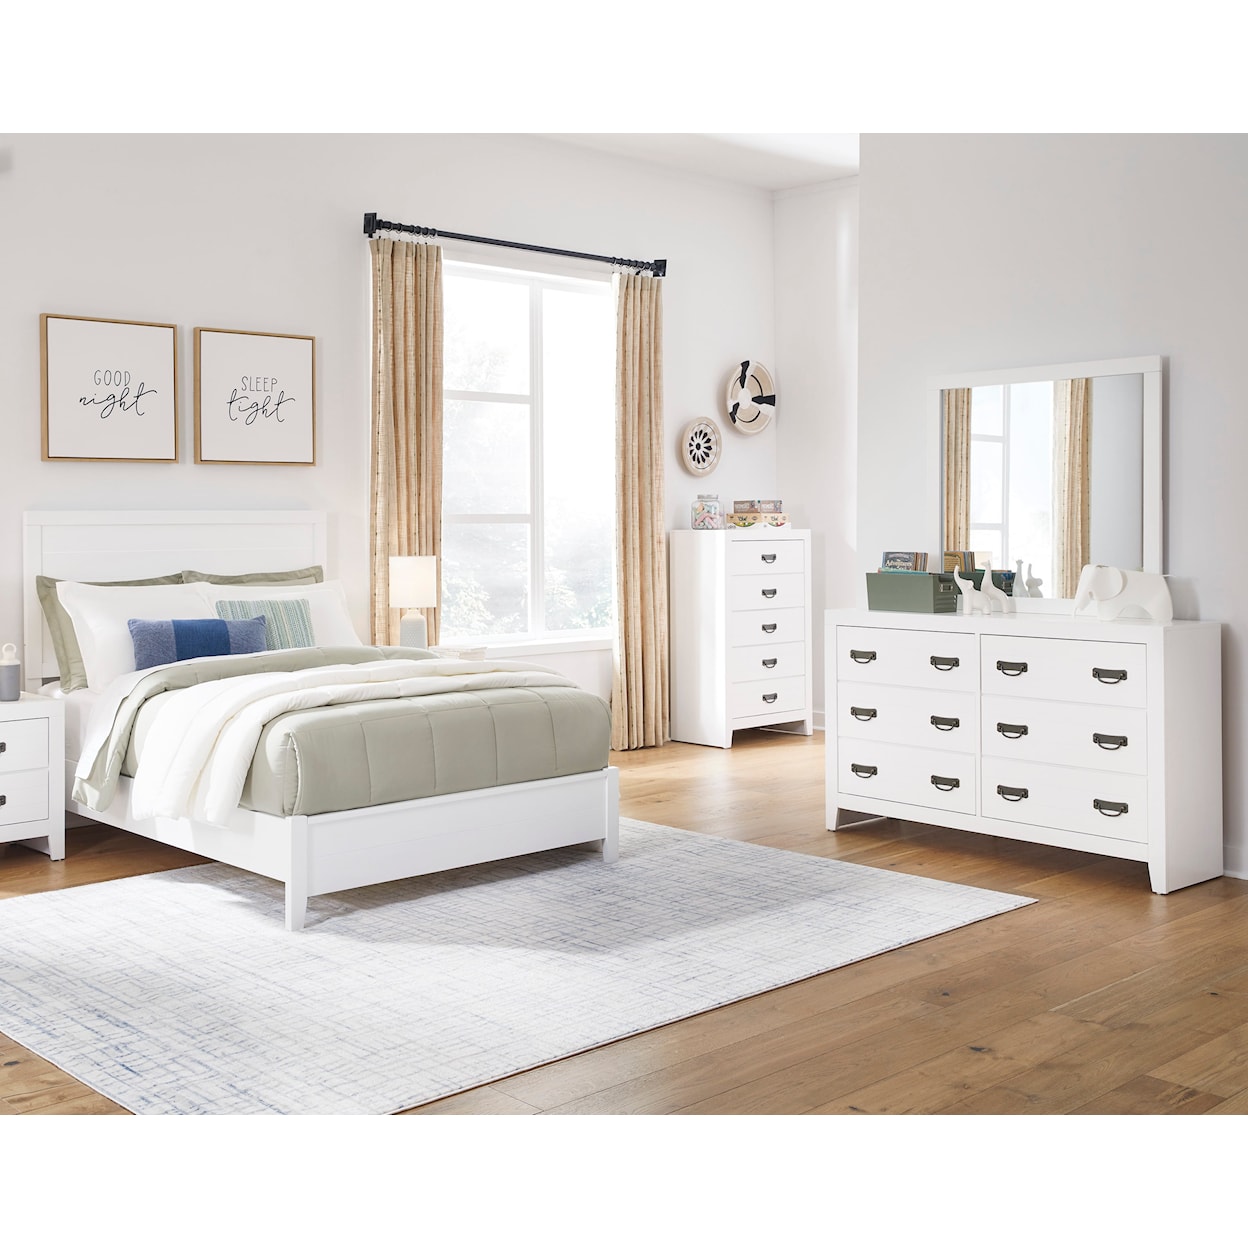 Ashley Furniture Signature Design Binterglen Full Bedroom Set